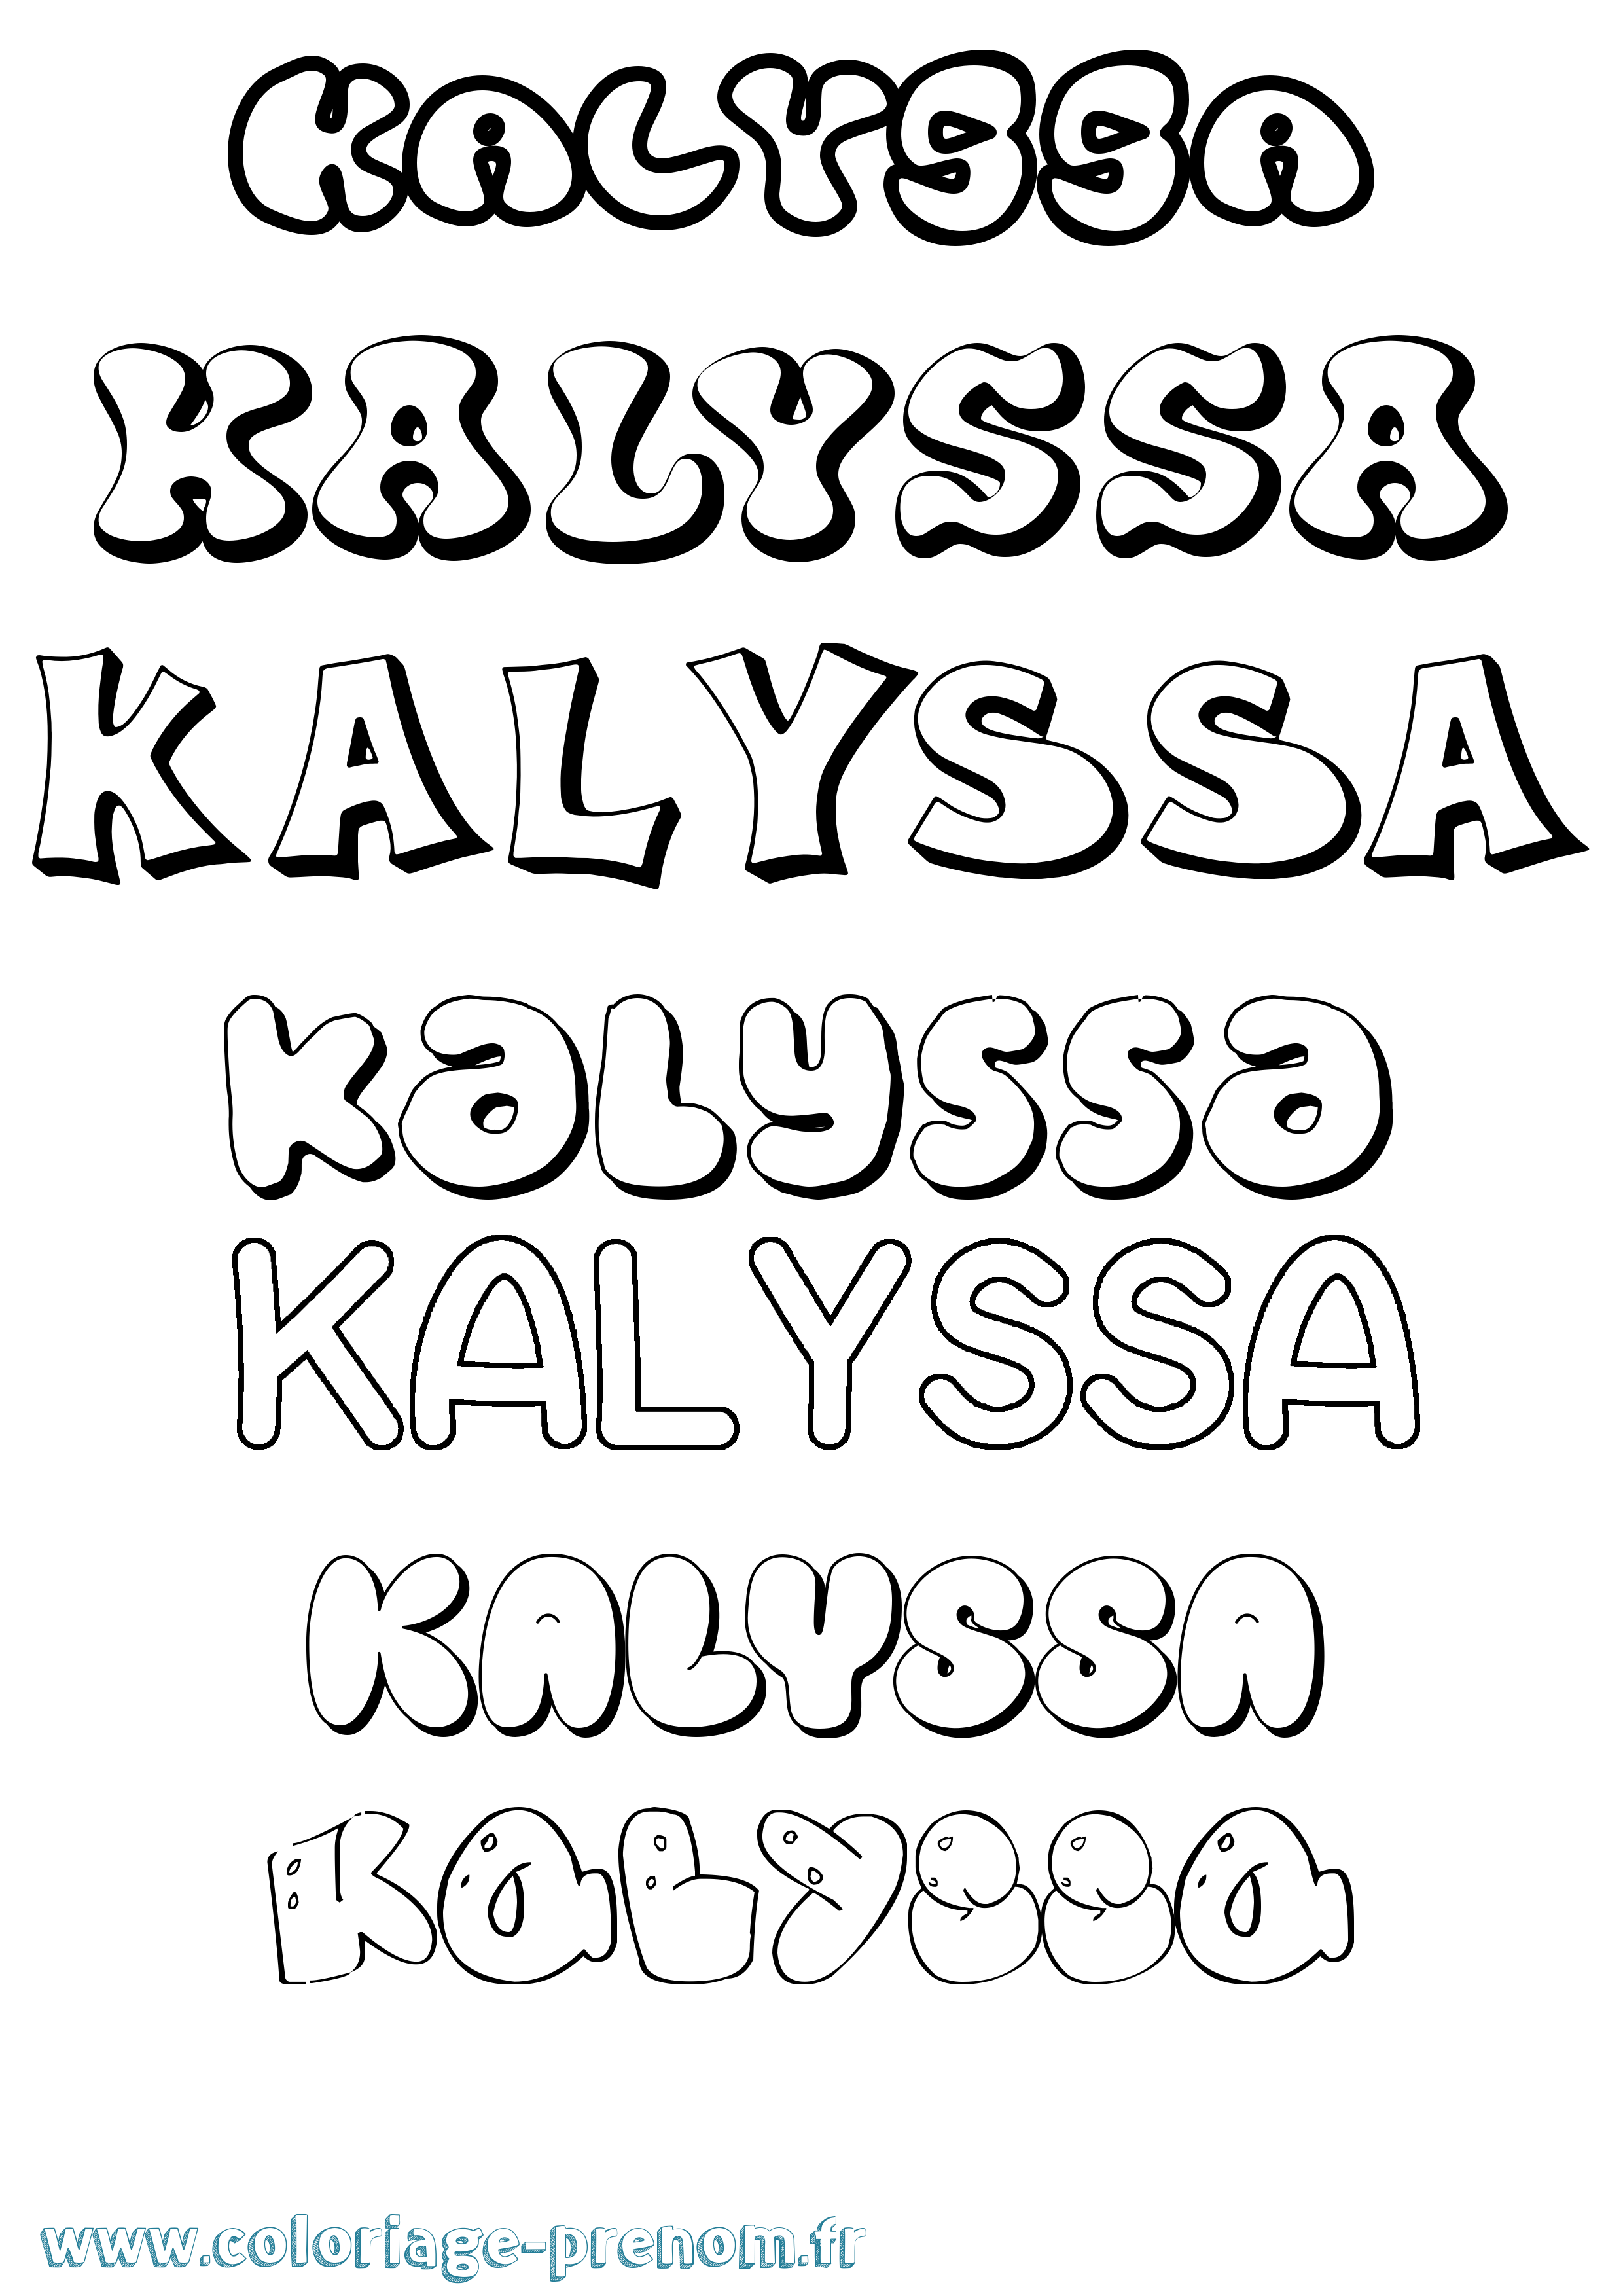 Coloriage prénom Kalyssa Bubble